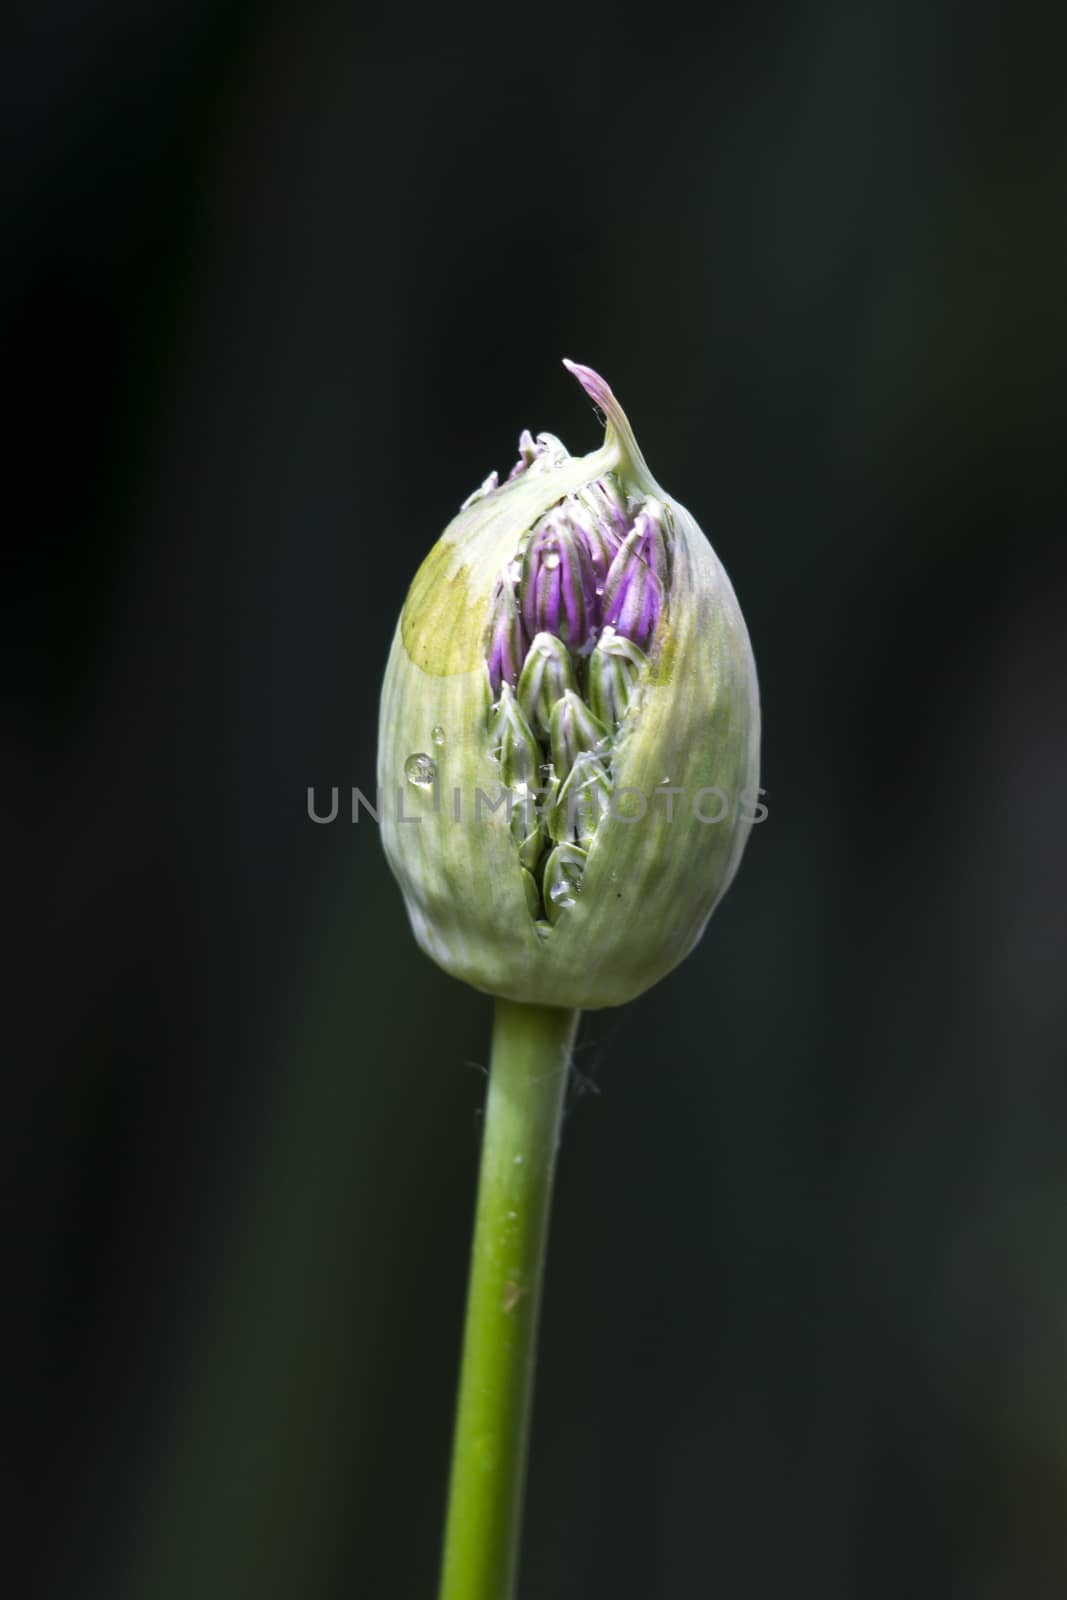 The giant ornamental onion (Allium giganteum) spring buds.